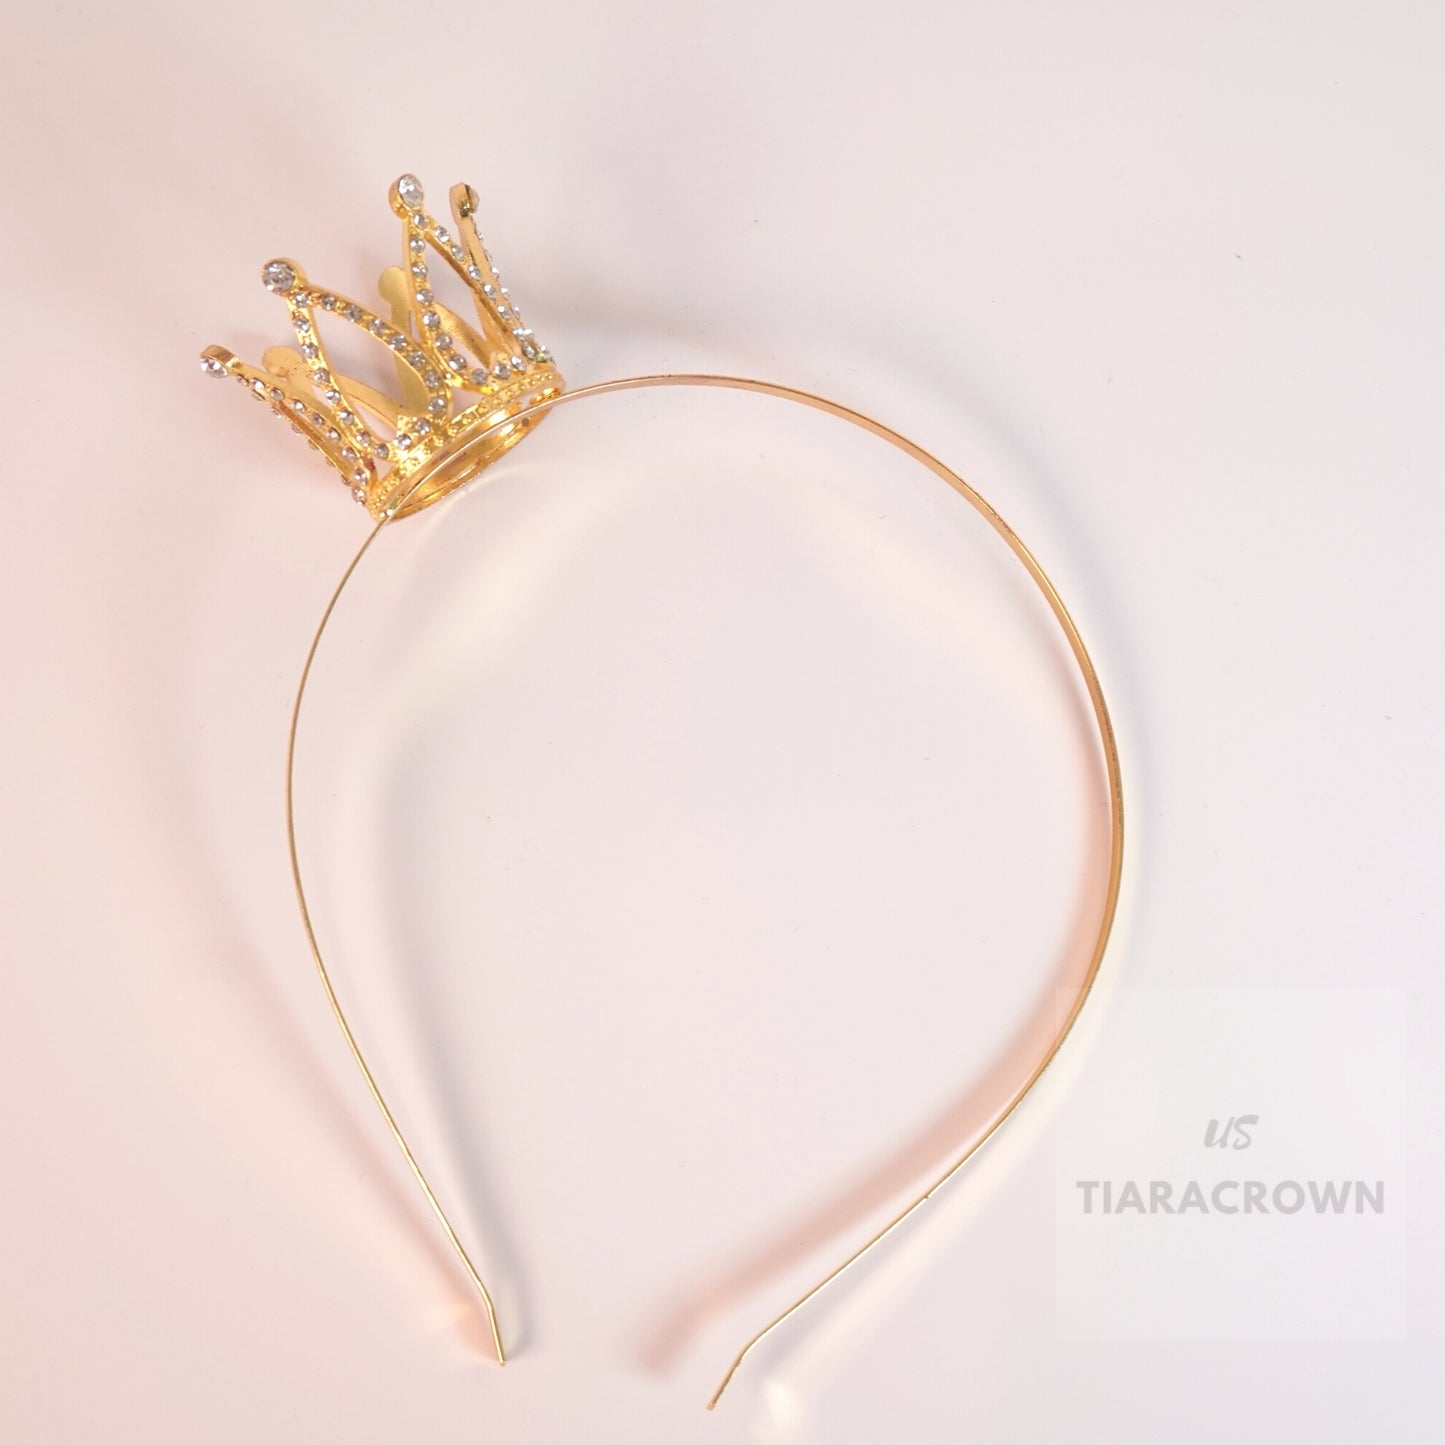 Kid Tiara Crowns Crystal Headband Princess Rhinestone Crown Bridal Wedding Prom Birthday Party Hair Accessories Jewelry